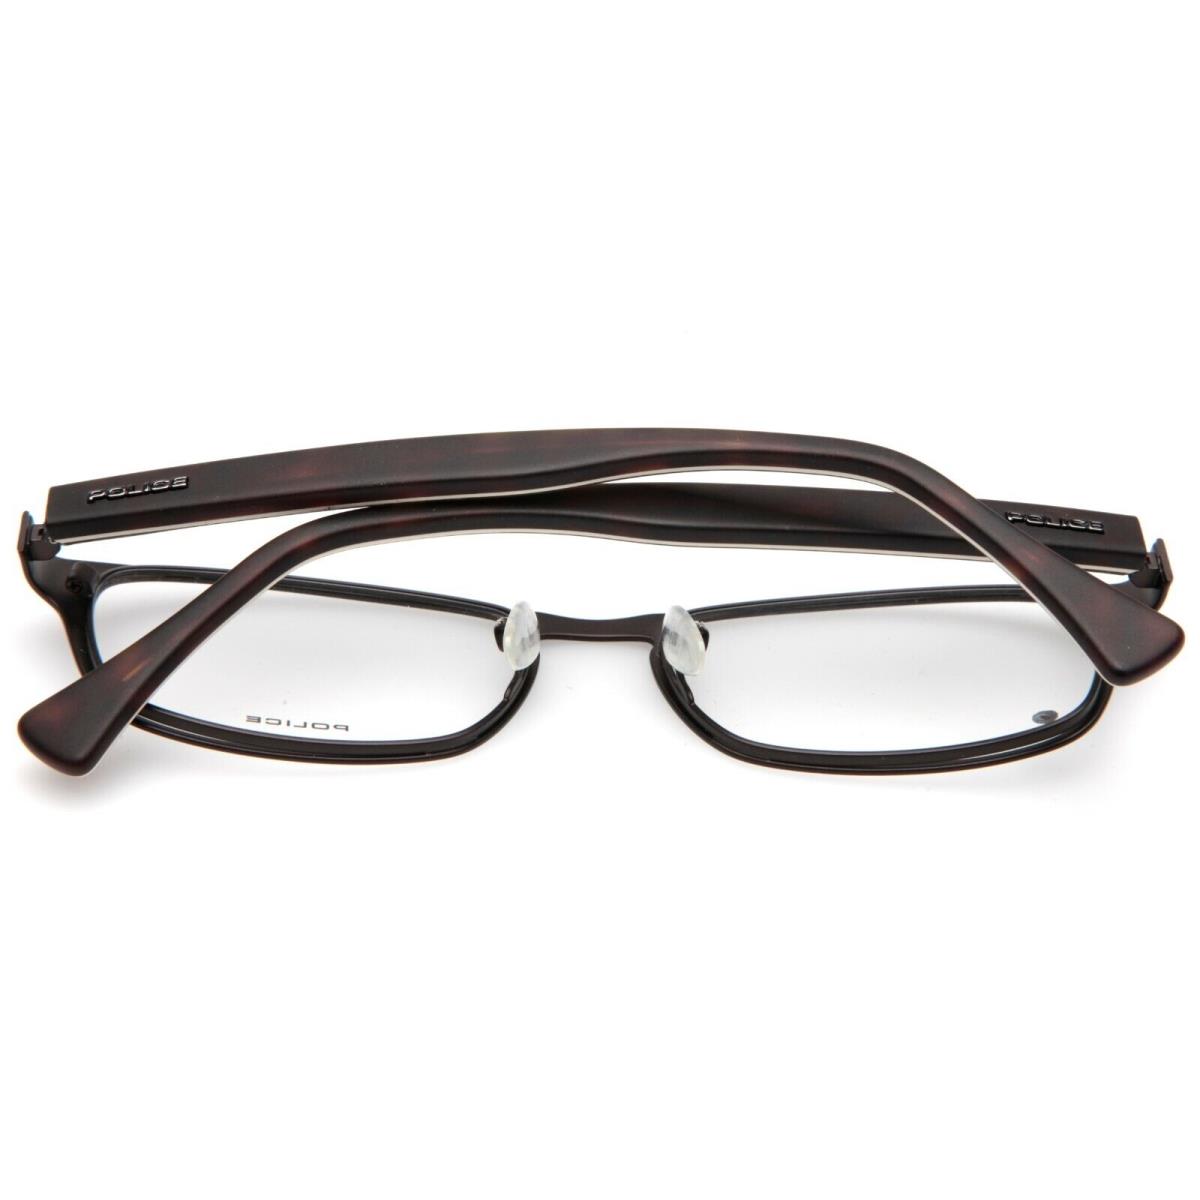 Police eyeglasses  - Frame: Black 6